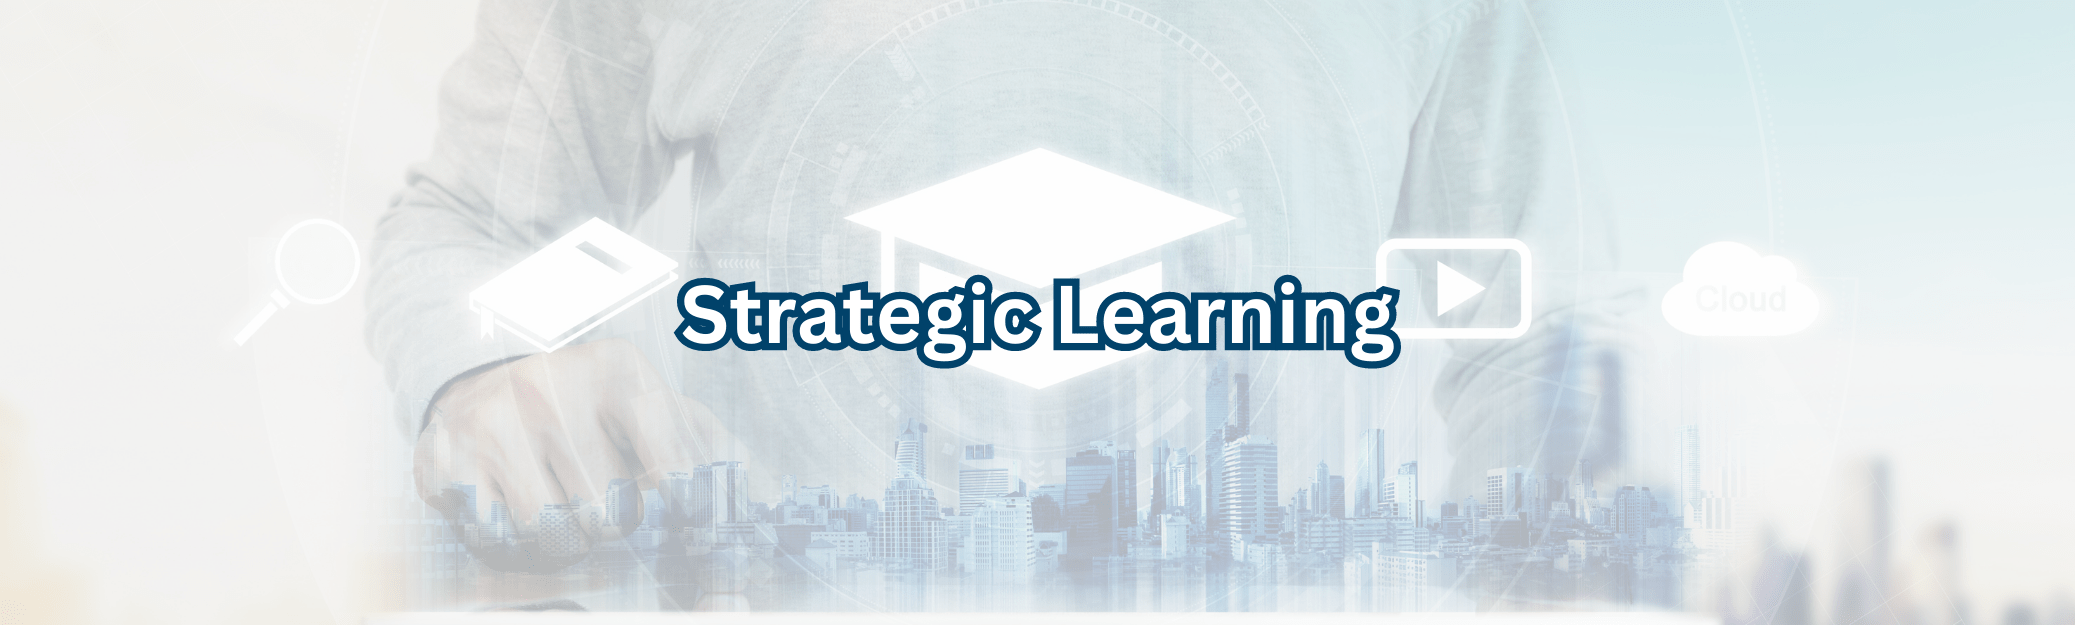 Strategic Learning Website